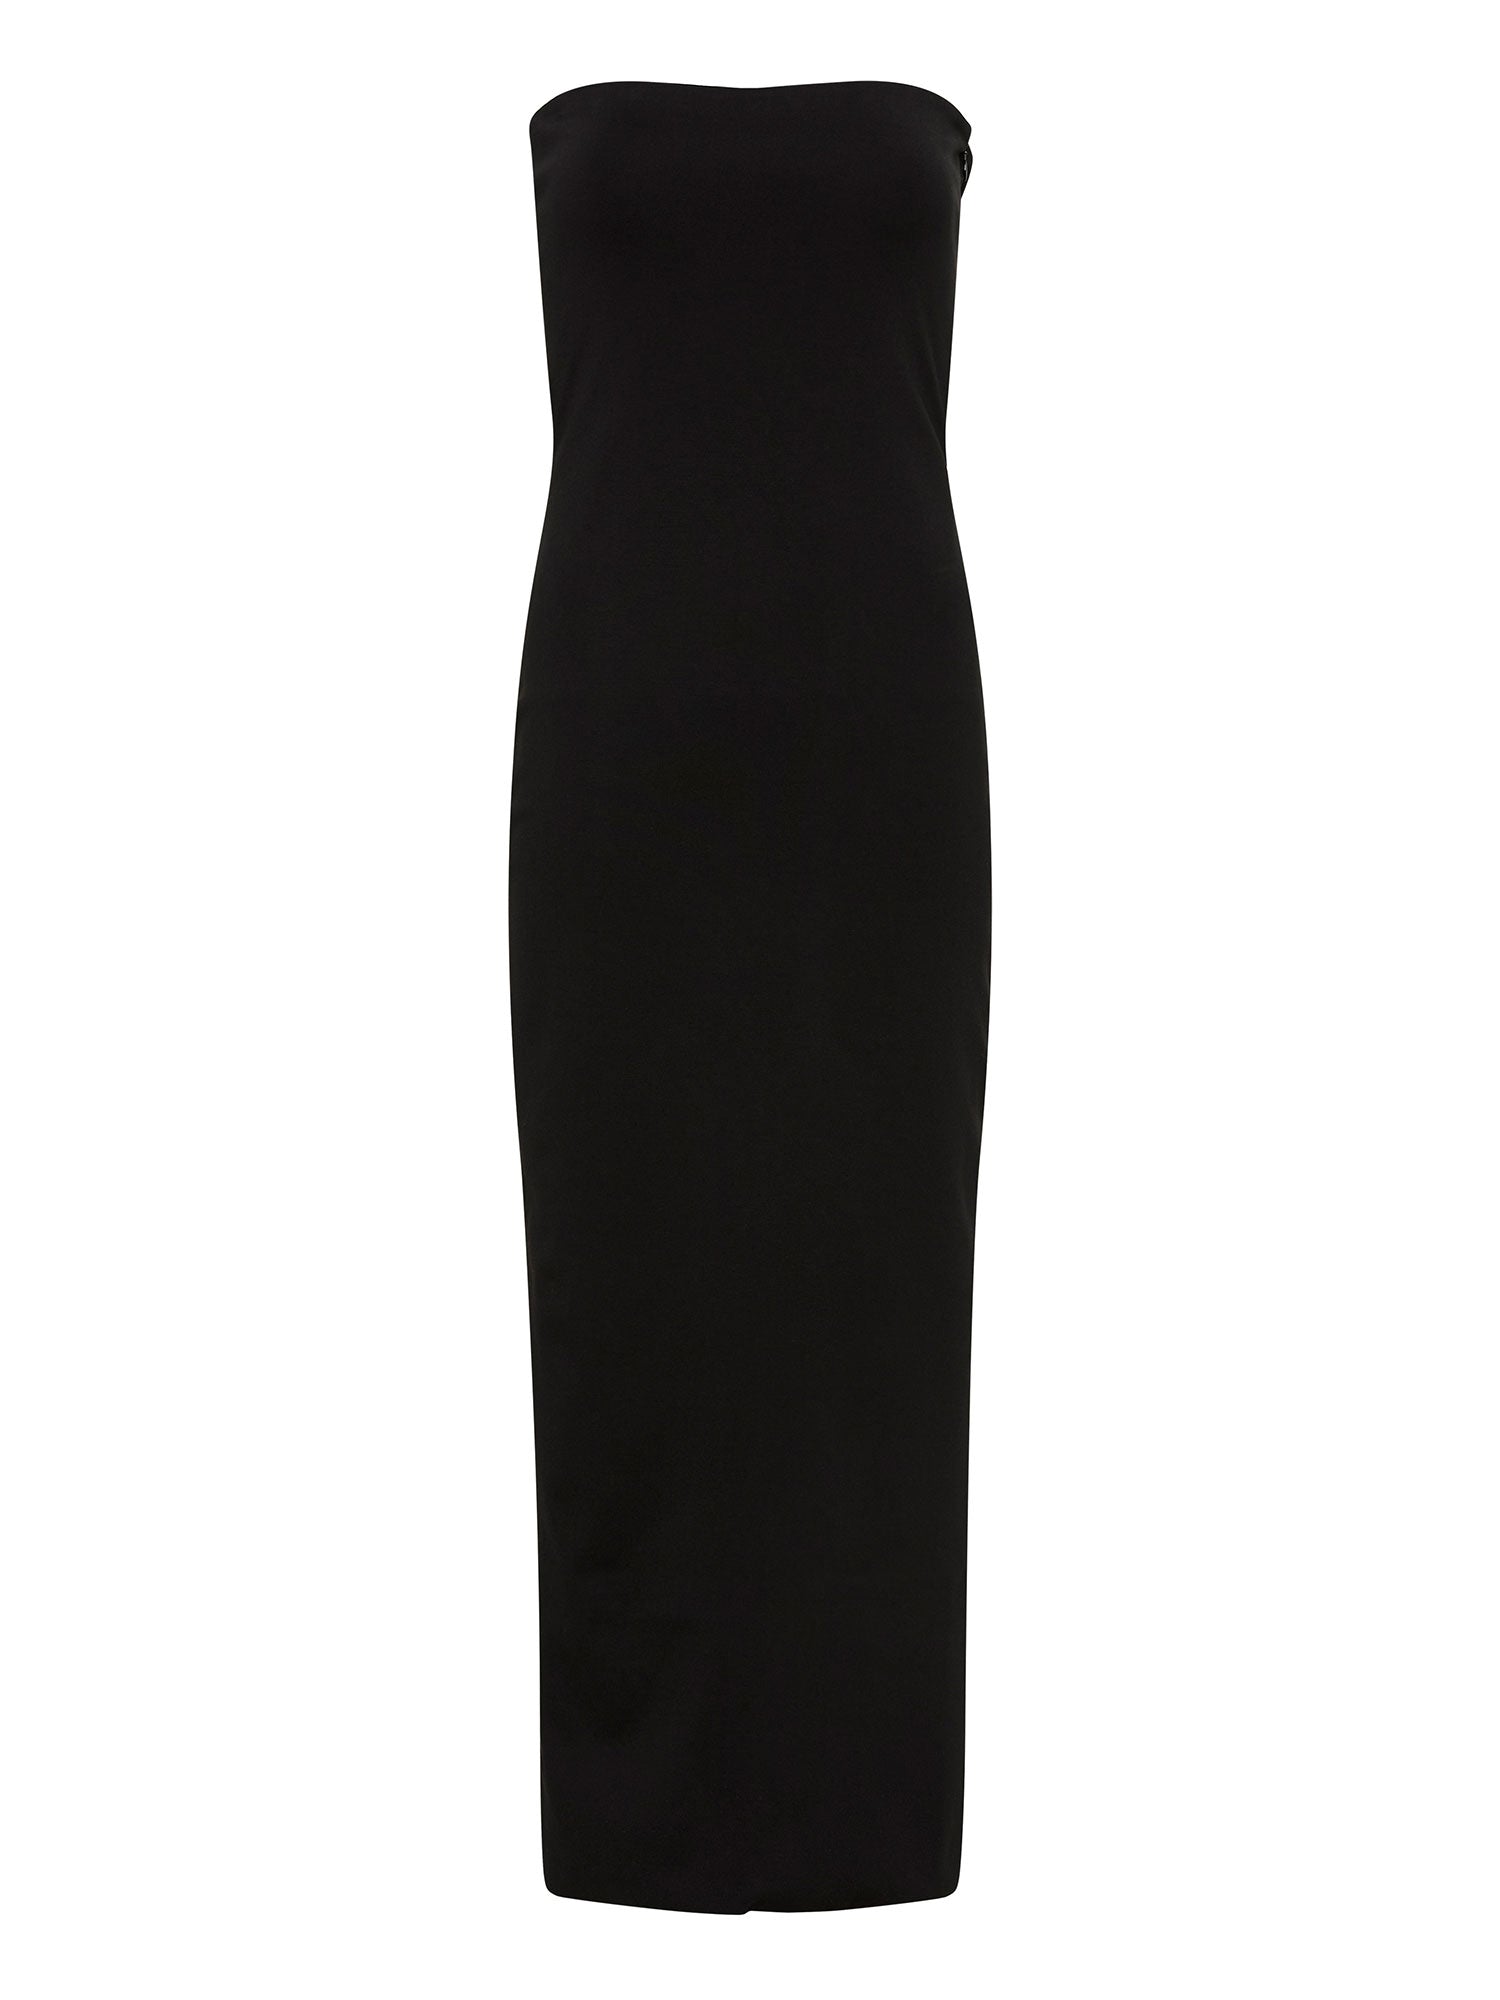 04 Elemental Tube Dress | Black | Paris Georgia Official Store